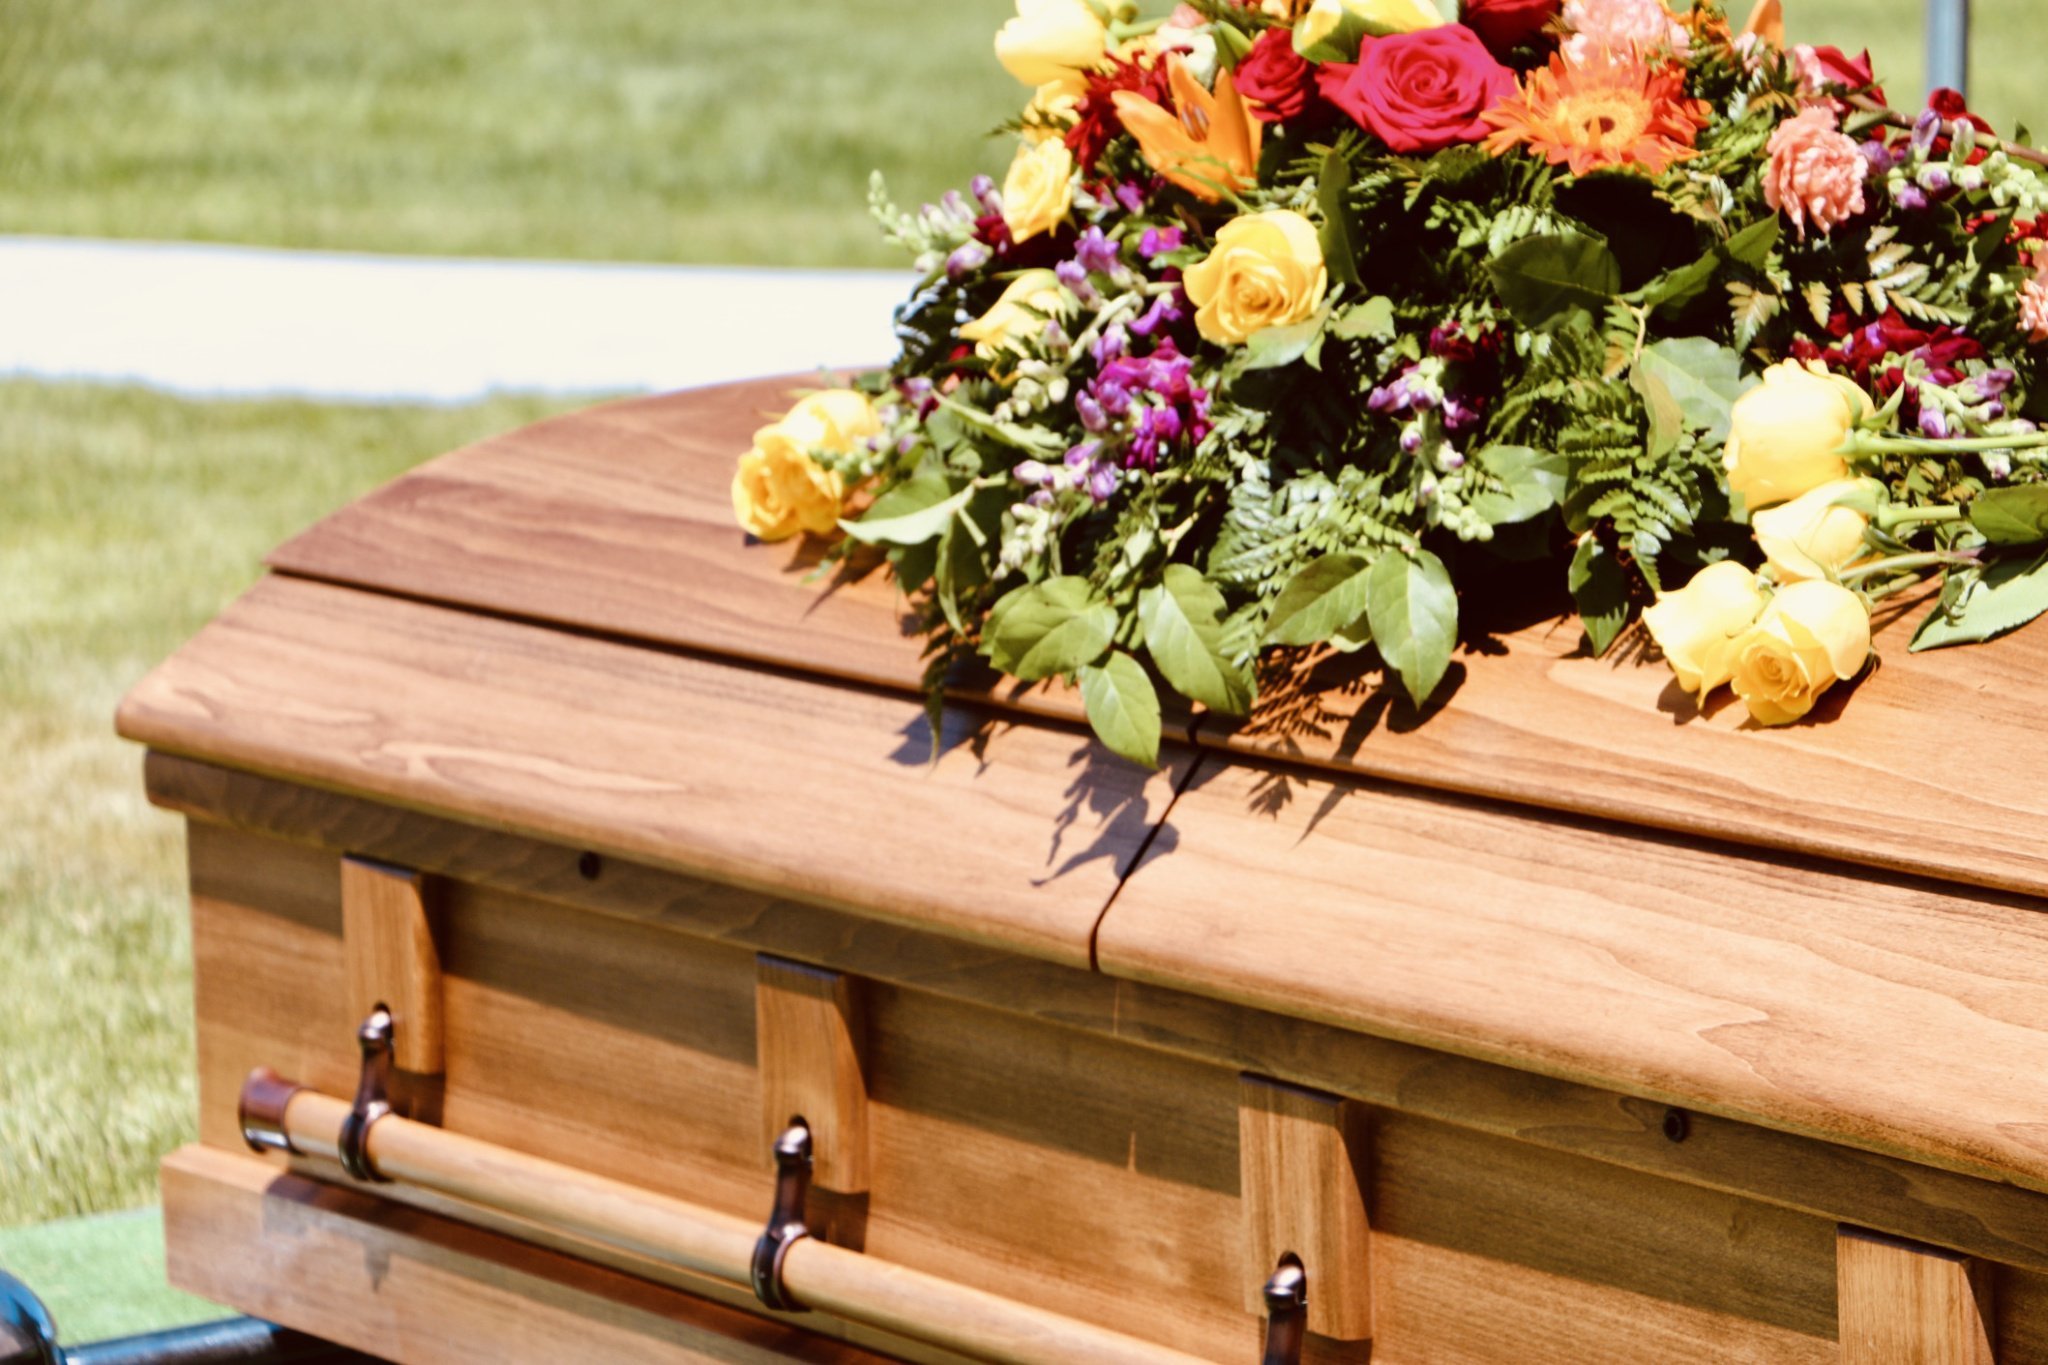 lovely-floral-arrangement-on-wood-casket-mourning-loss-of-loved-one-death-of-friend-or-family-member_t20_LJRrjV.jpg